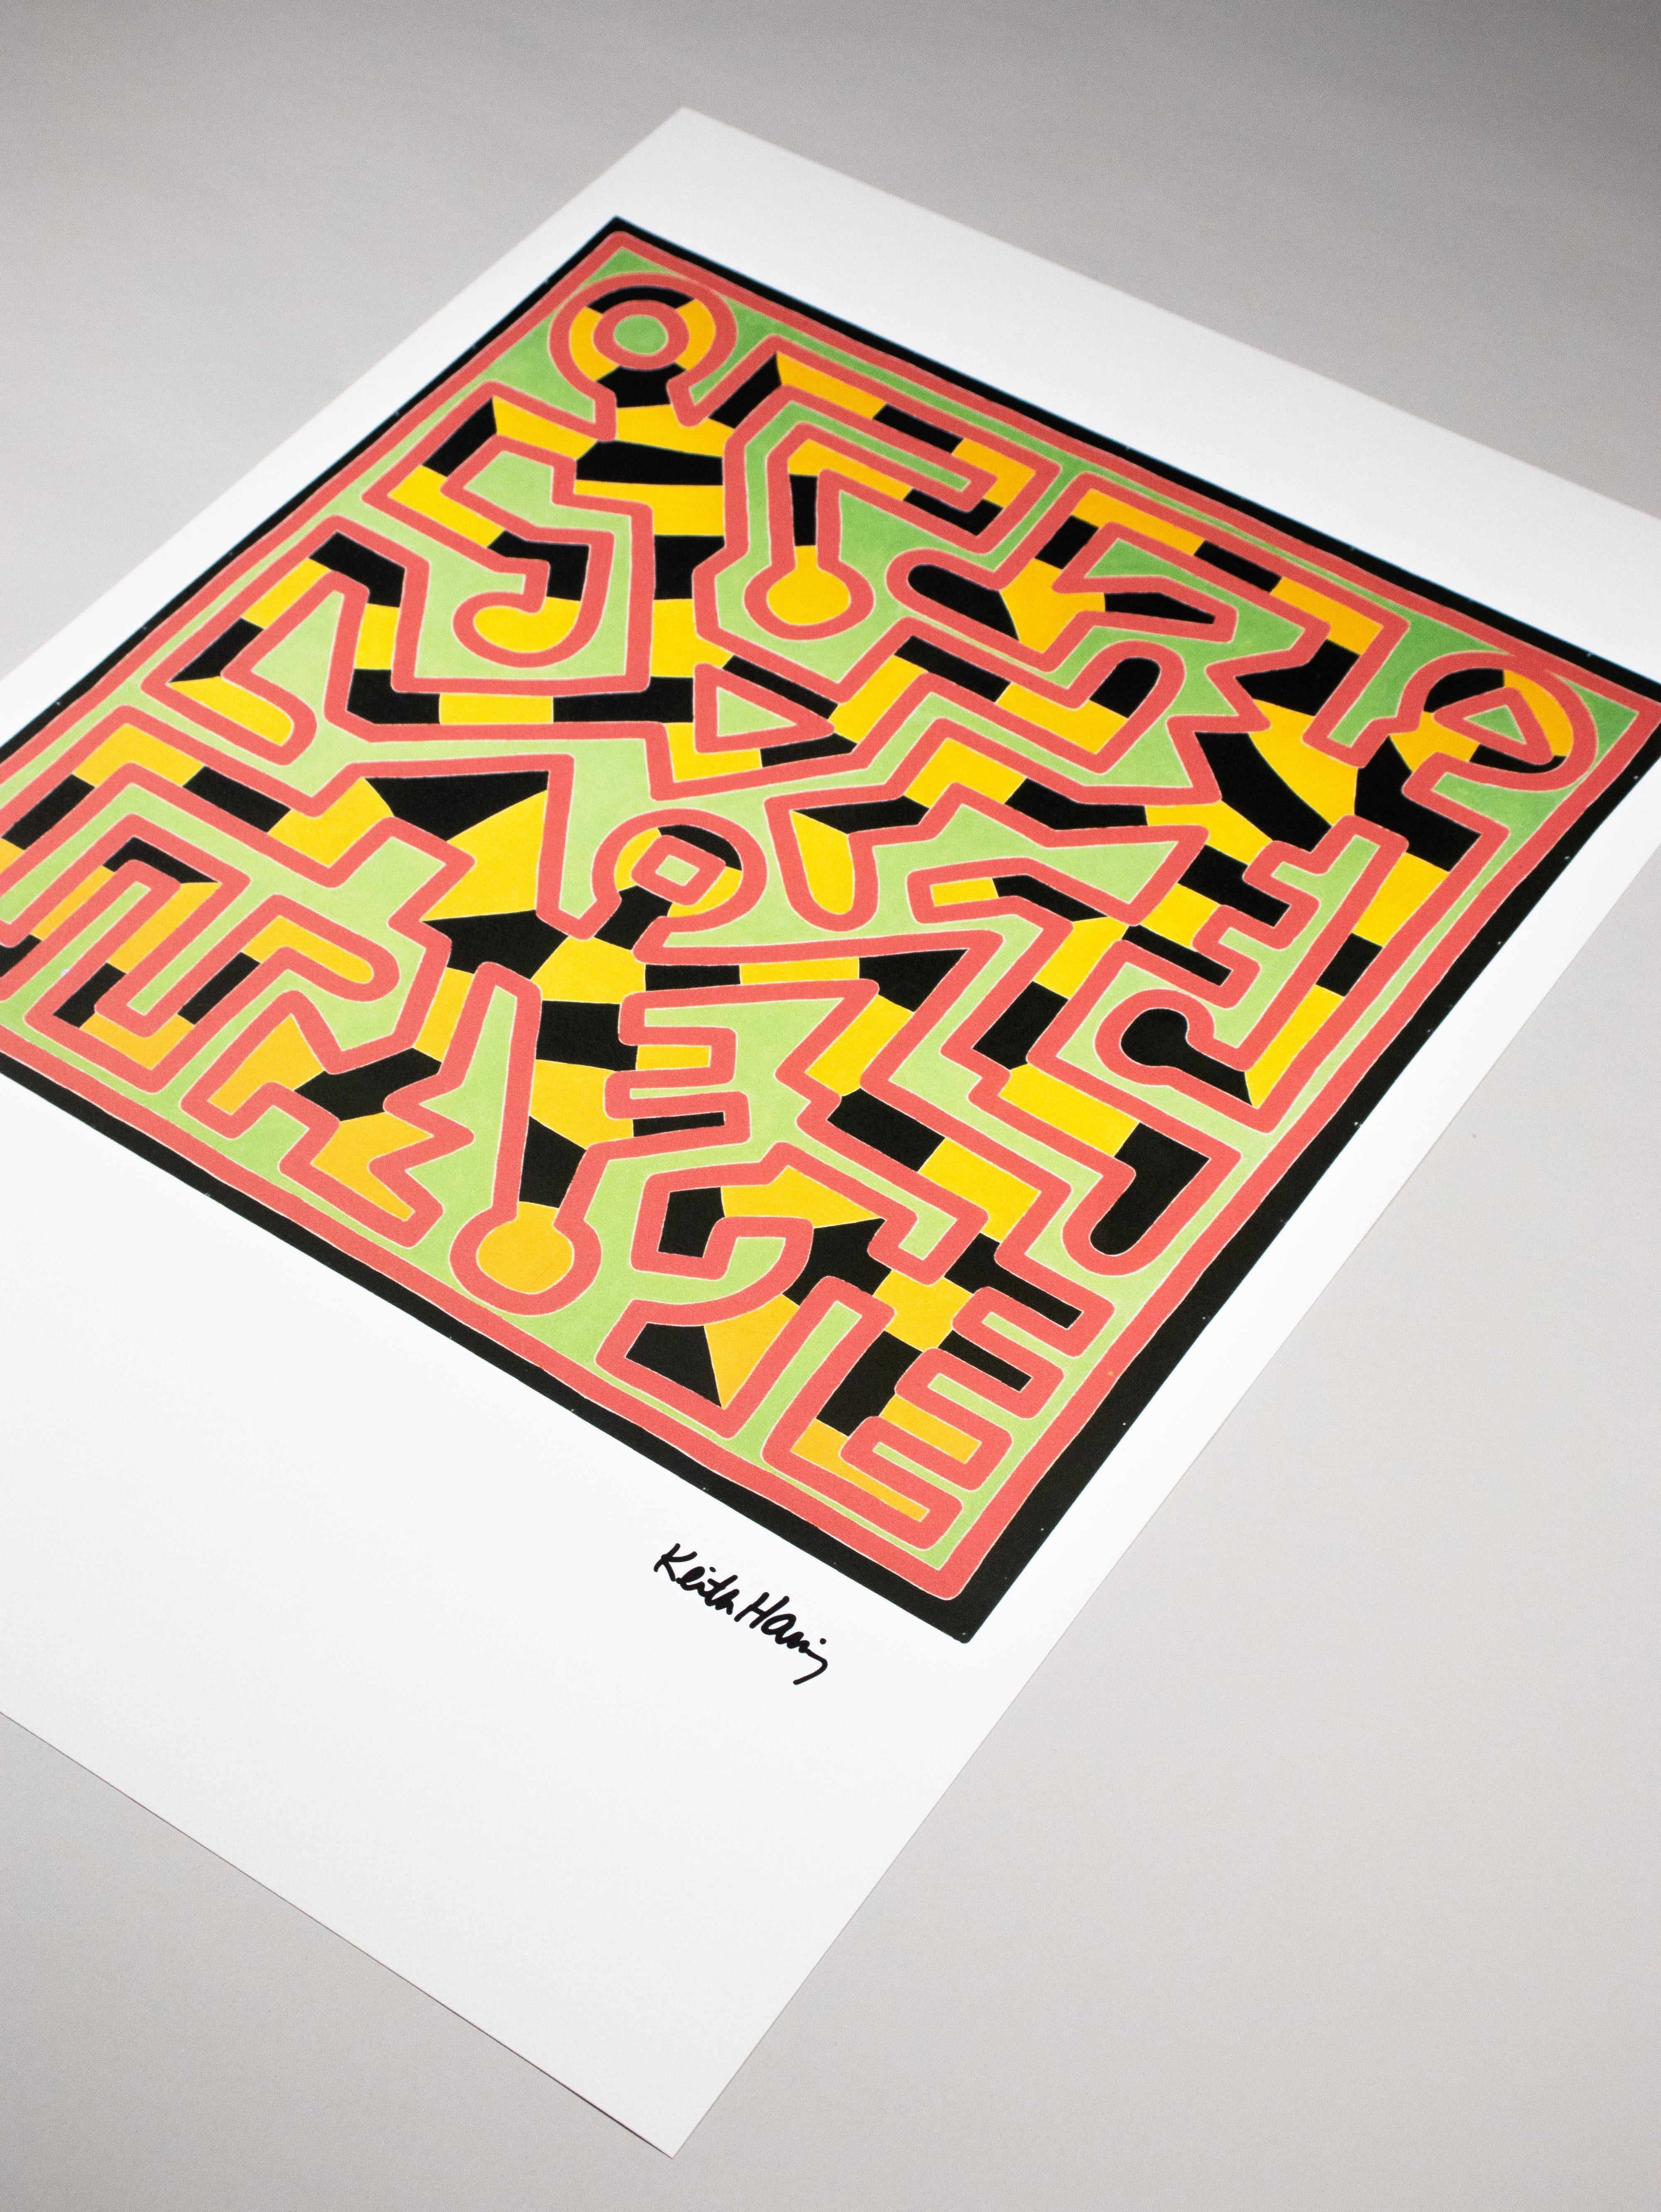 Lithographie – limitierte Auflage 15/150 Exemplare – Keith Haring Foundation Inc. im Angebot 6